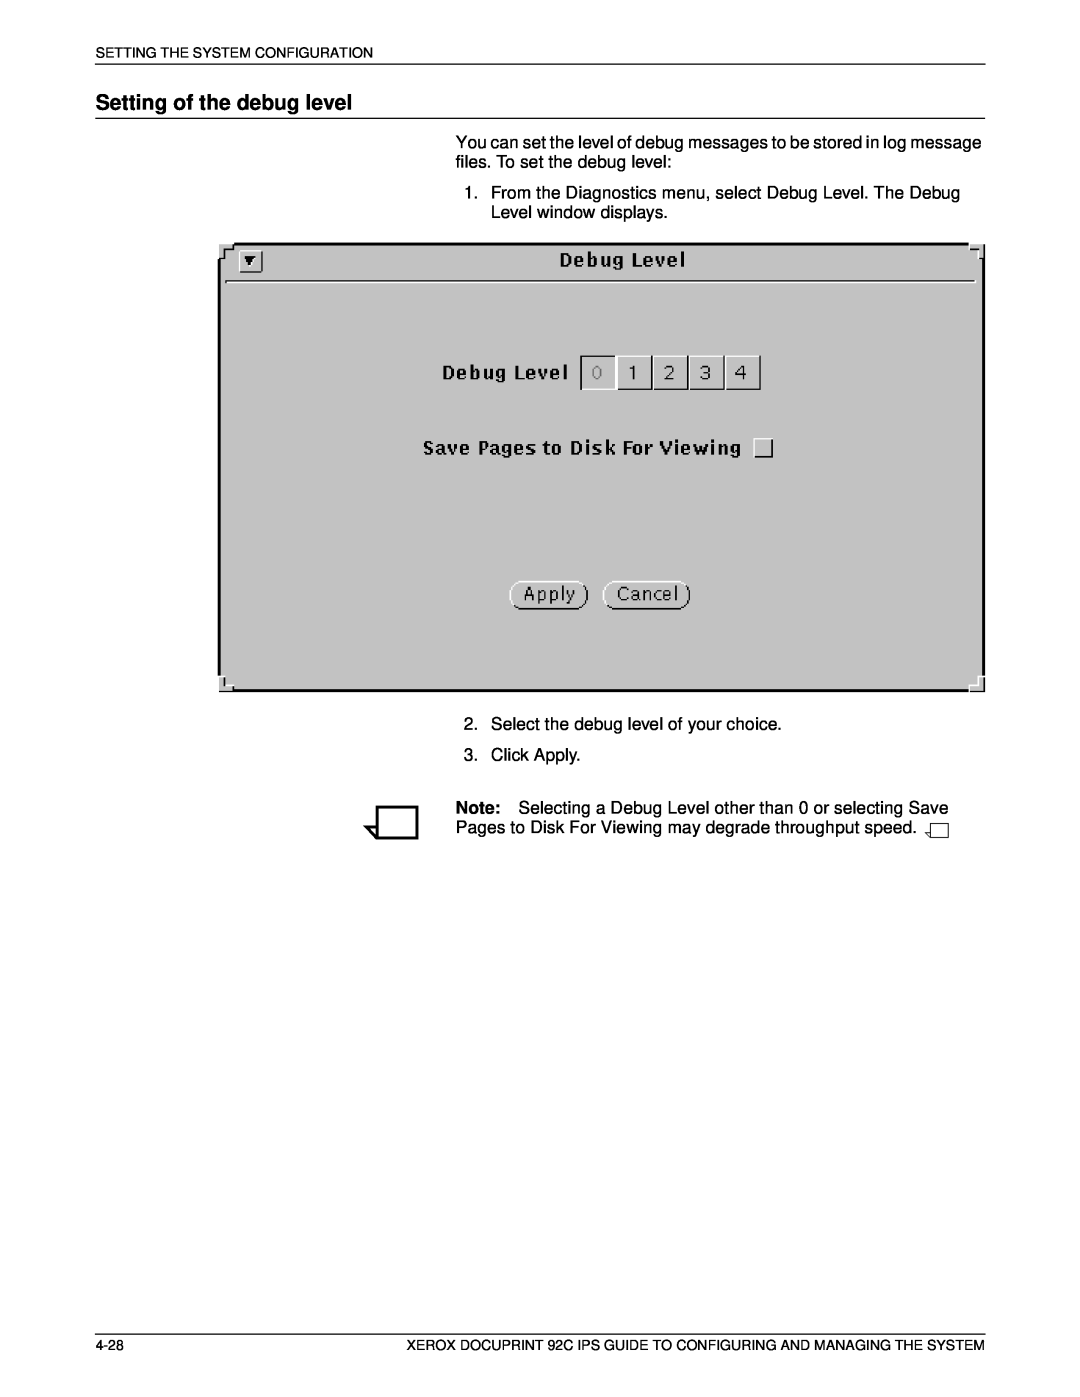 Xerox 92C IPS manual Setting of the debug level 